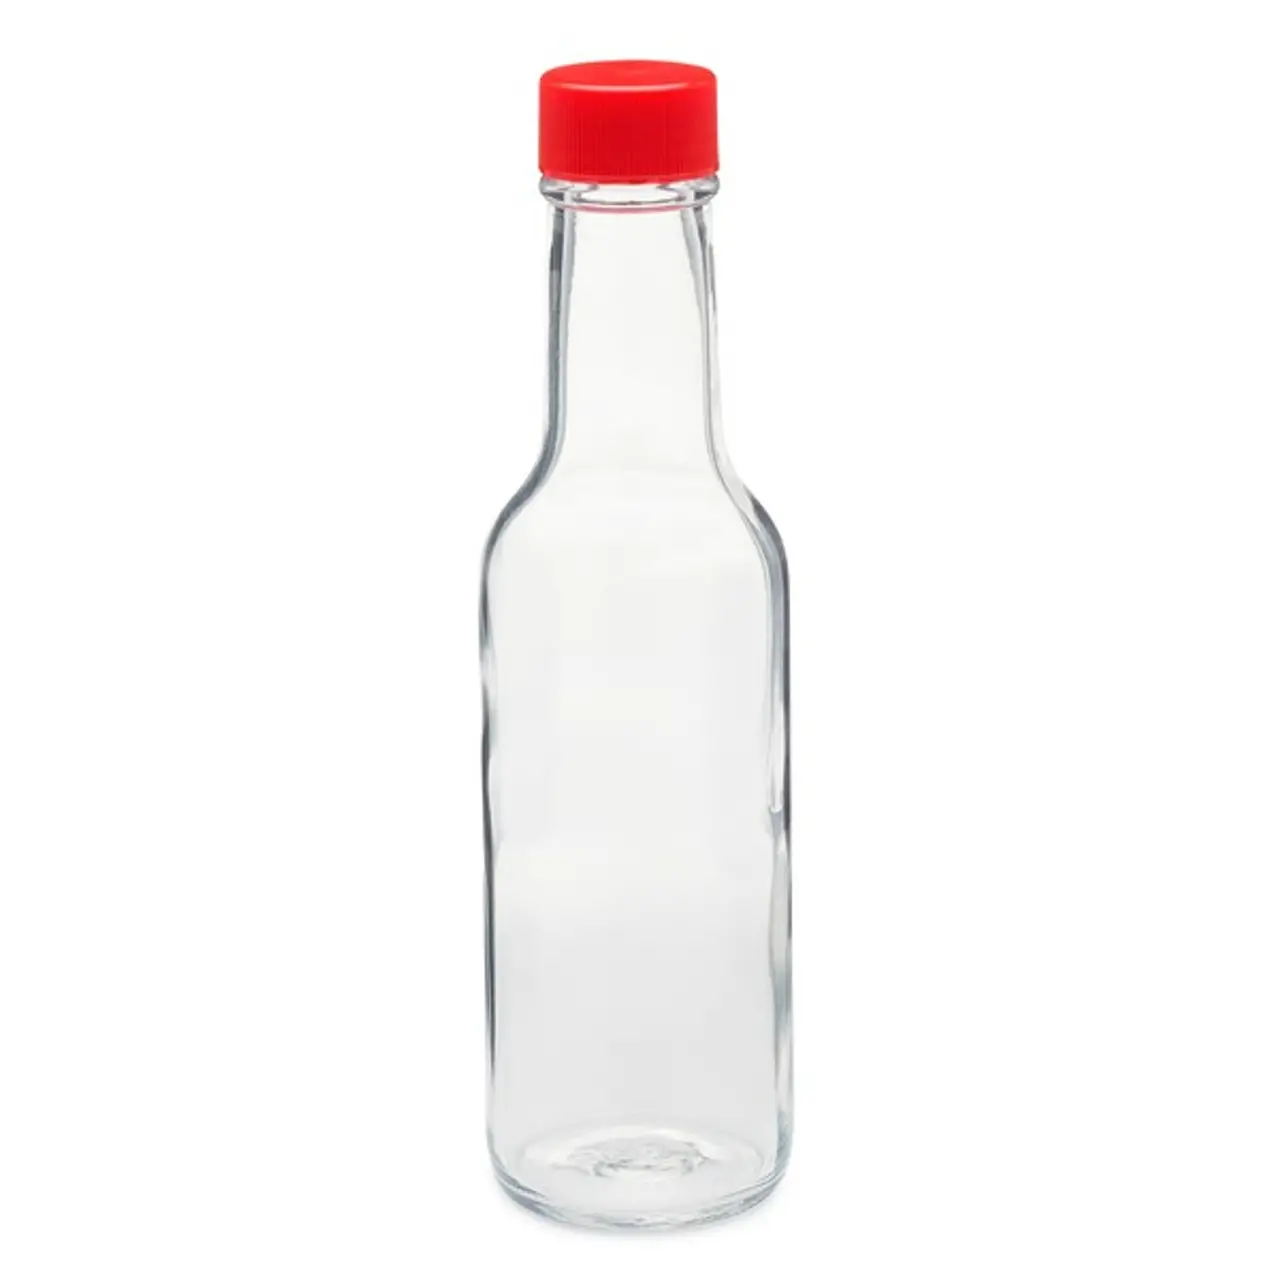 5 oz Clear Glass Hot Sauce Bottles (Red PP Cap)